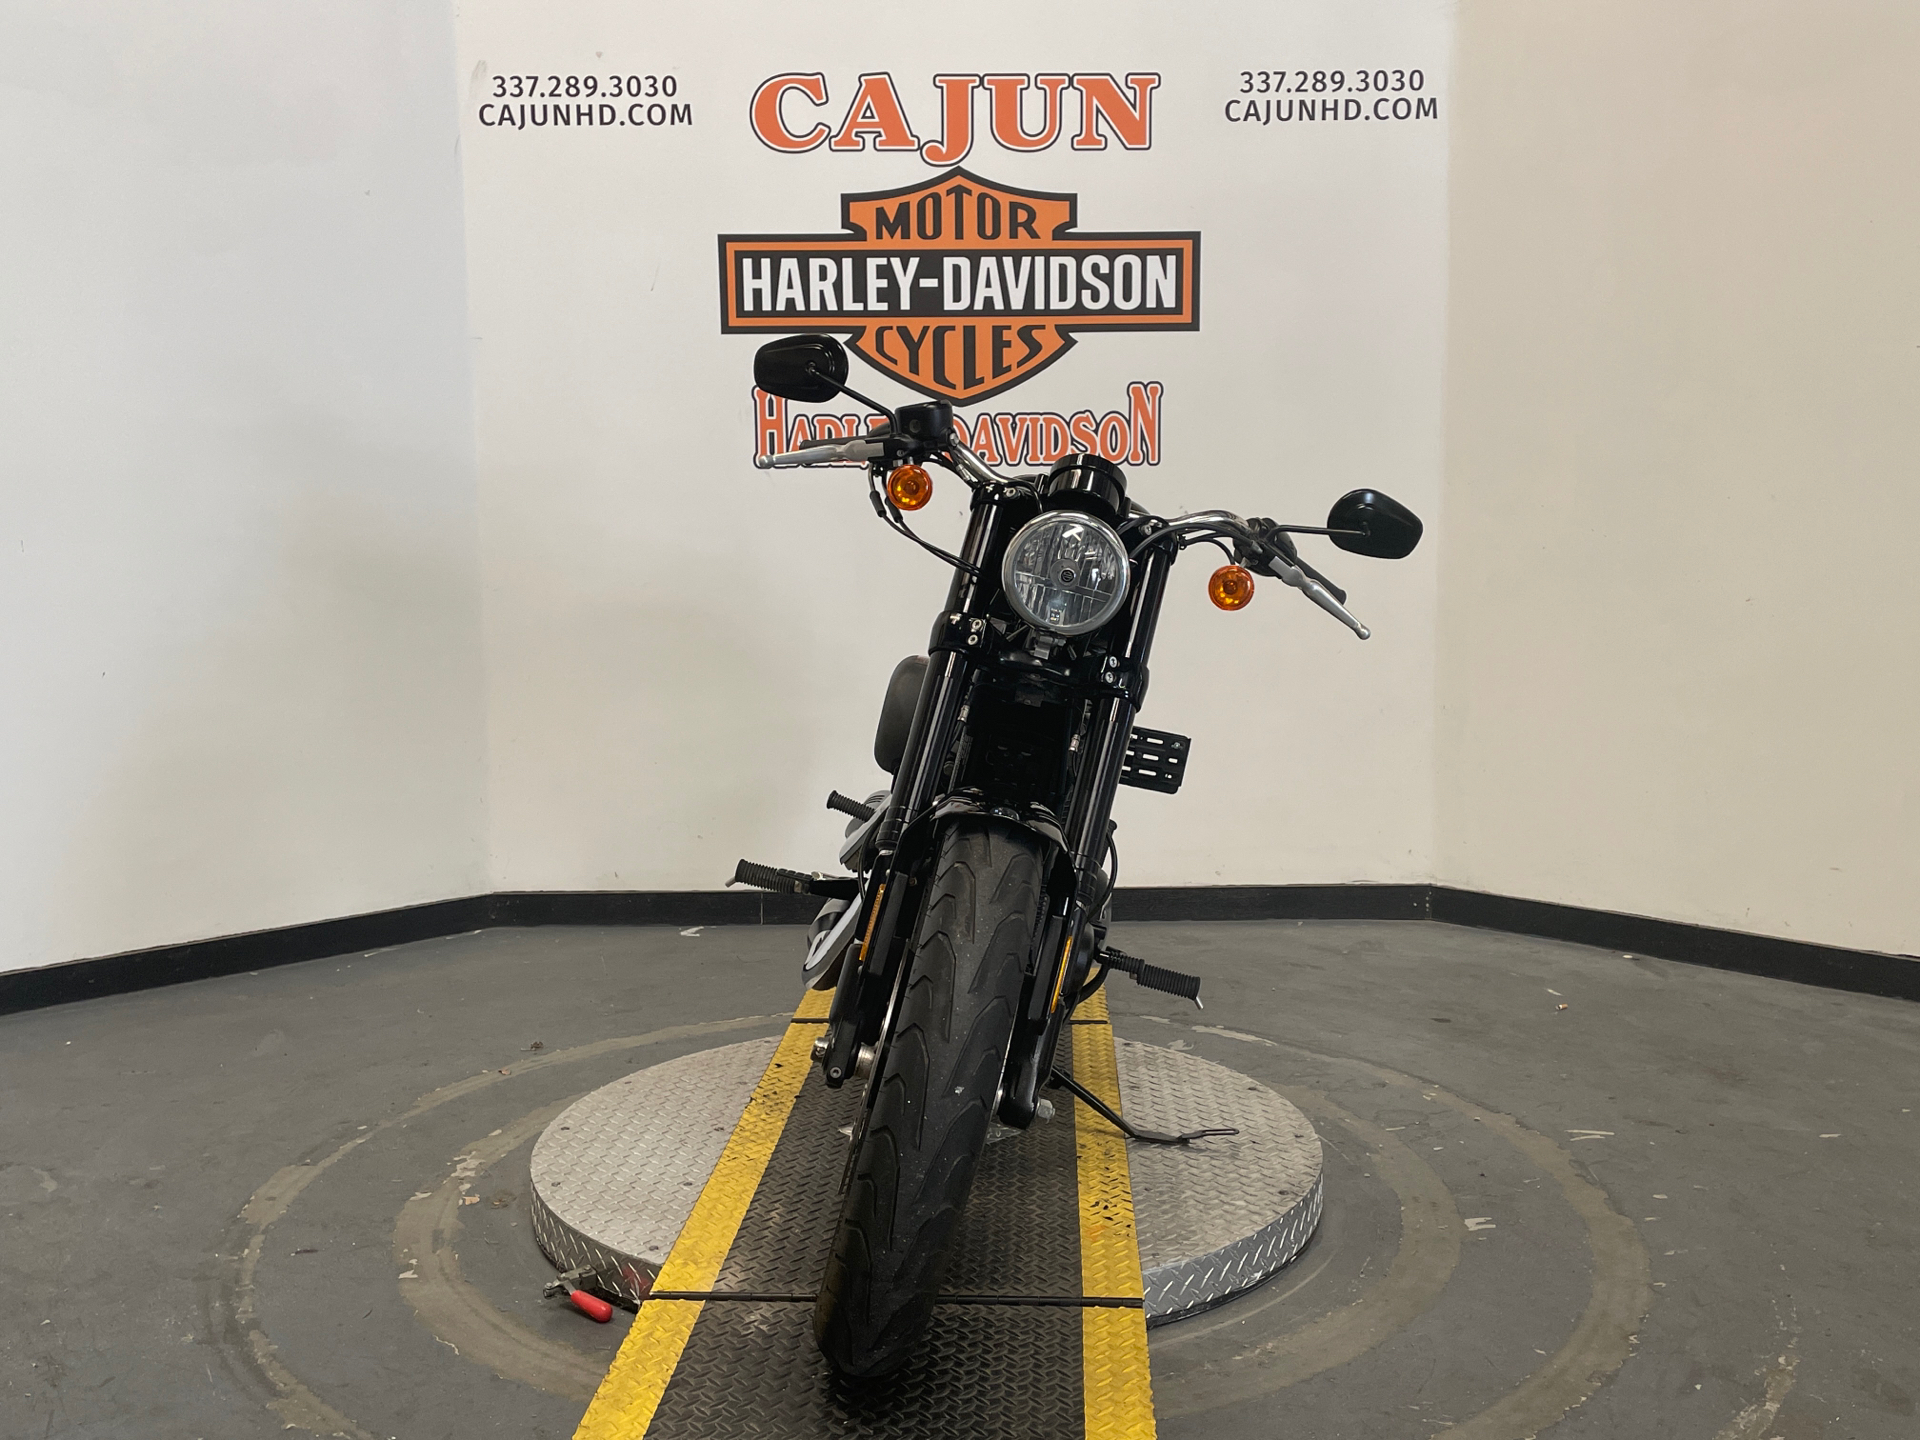 2016 Harley-Davidson Roadster near me - Photo 7